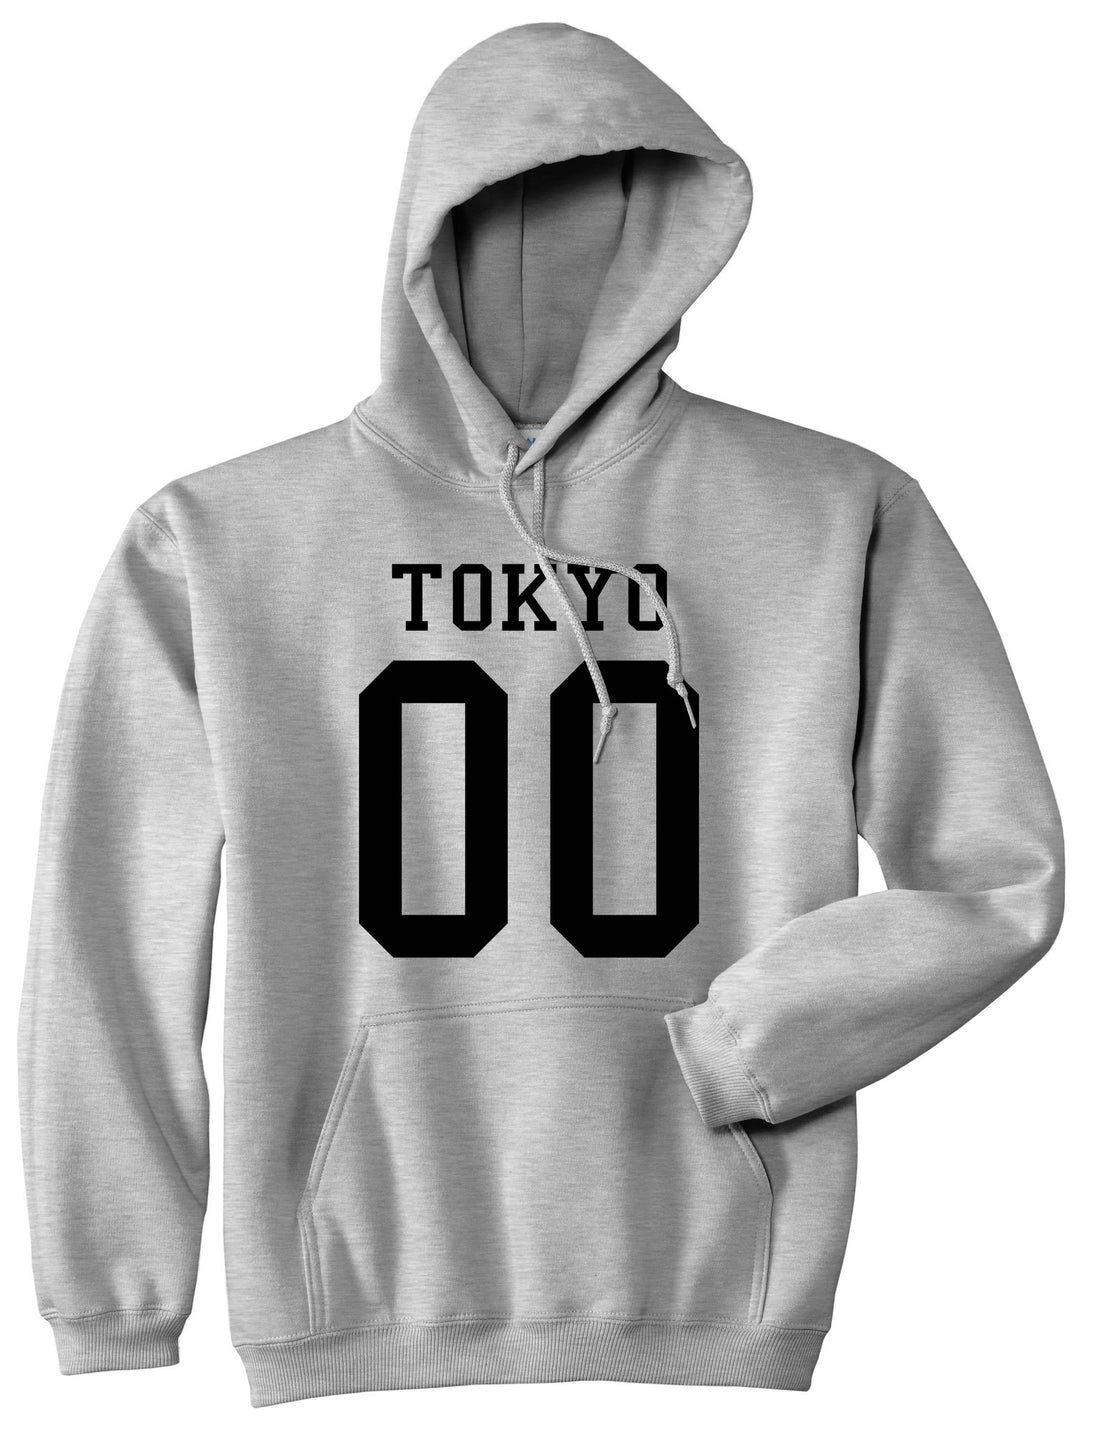 Tokyo Team 00 Jersey Japan Pullover Hoodie in Grey By Kings Of NY